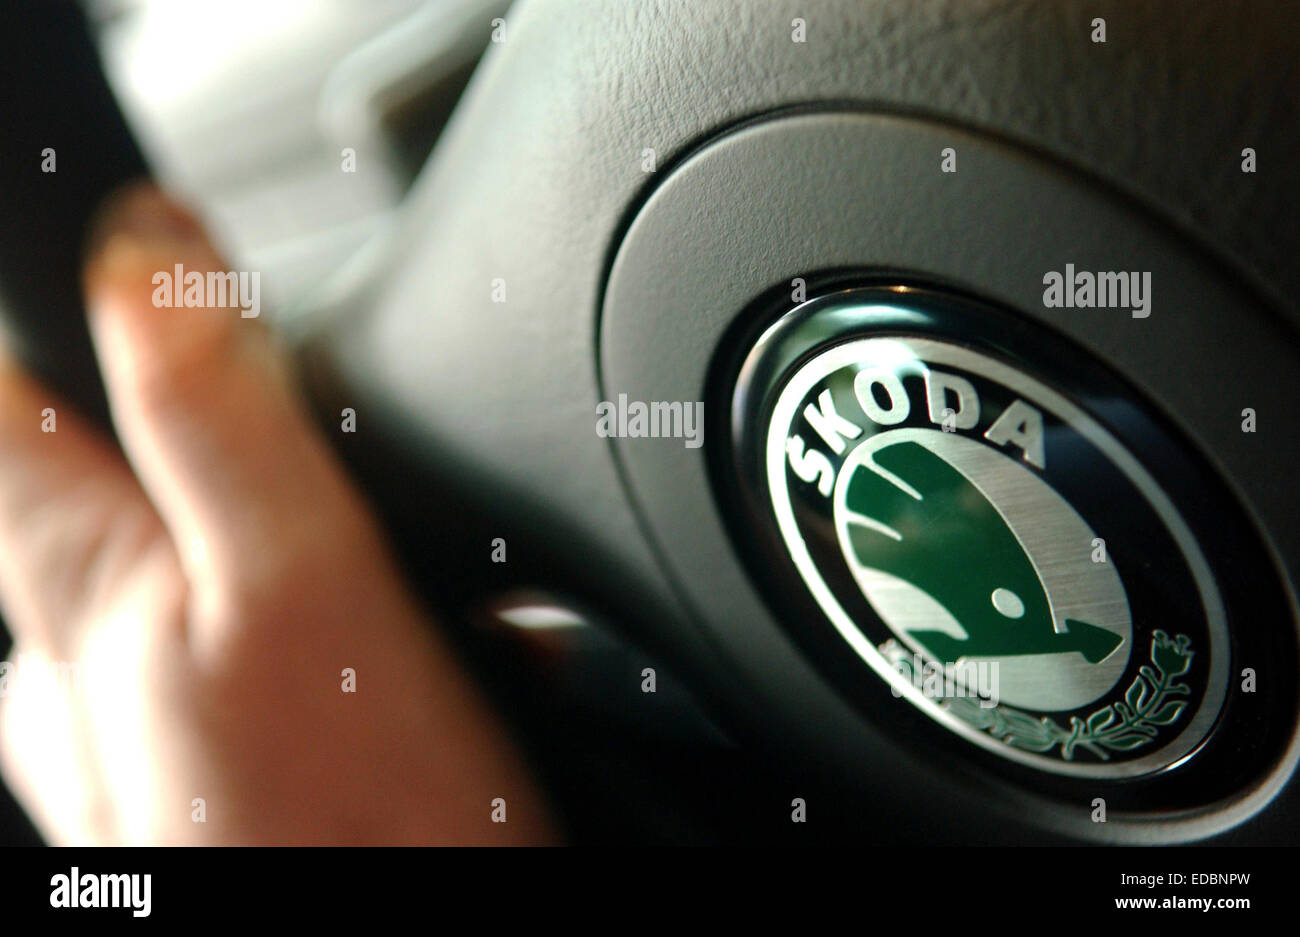 Skoda car steering with Skoda product logo. Stock Photo